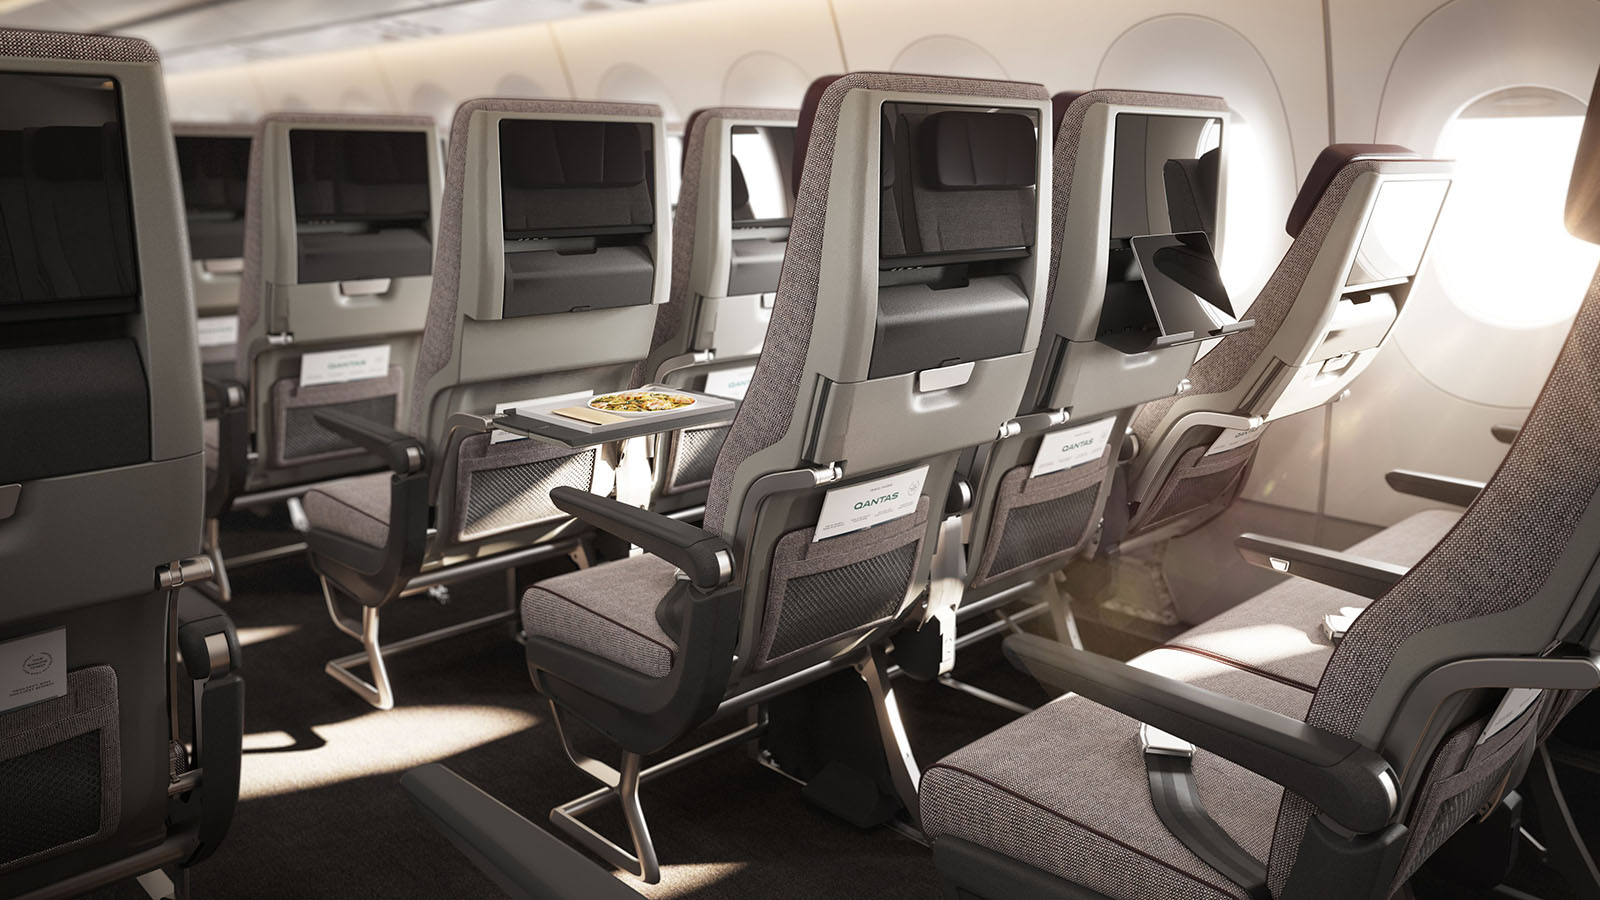 Looking forward in Qantas' Project Sunrise Economy seat